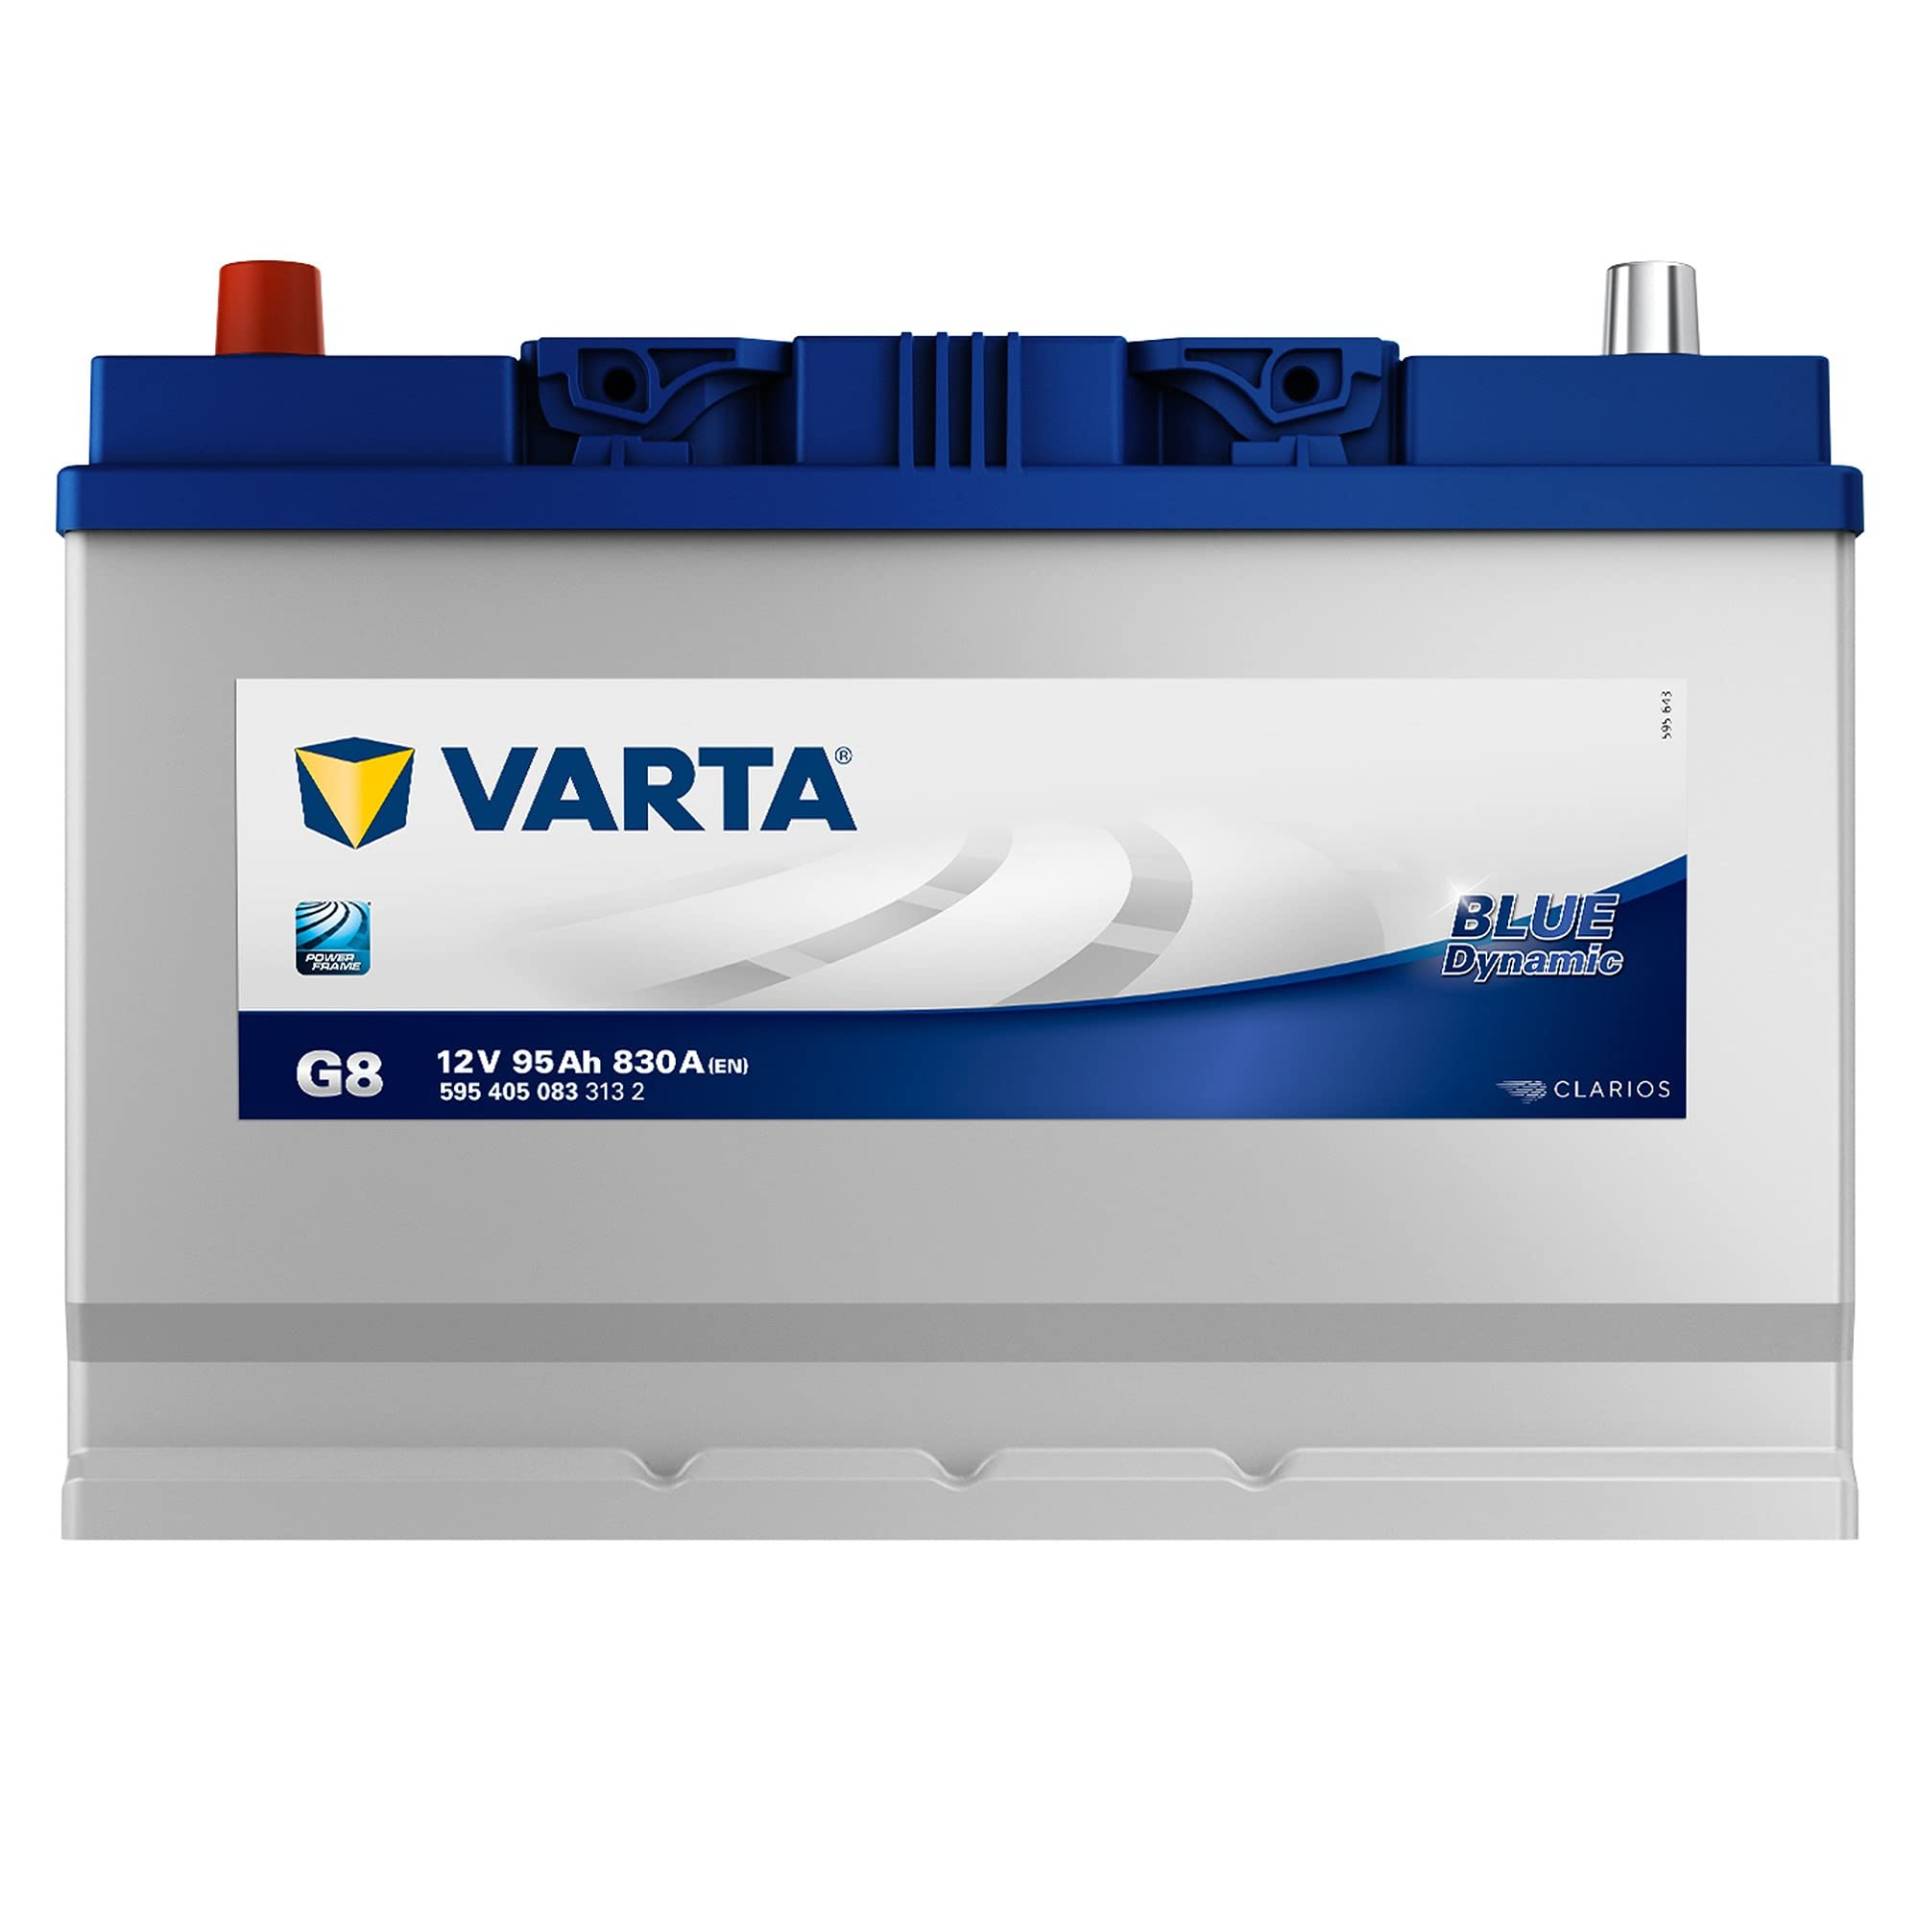 Varta 5954050833132 Blue Dynamic G8 Autobatterie 12 V 95 Ah 830 A von Varta